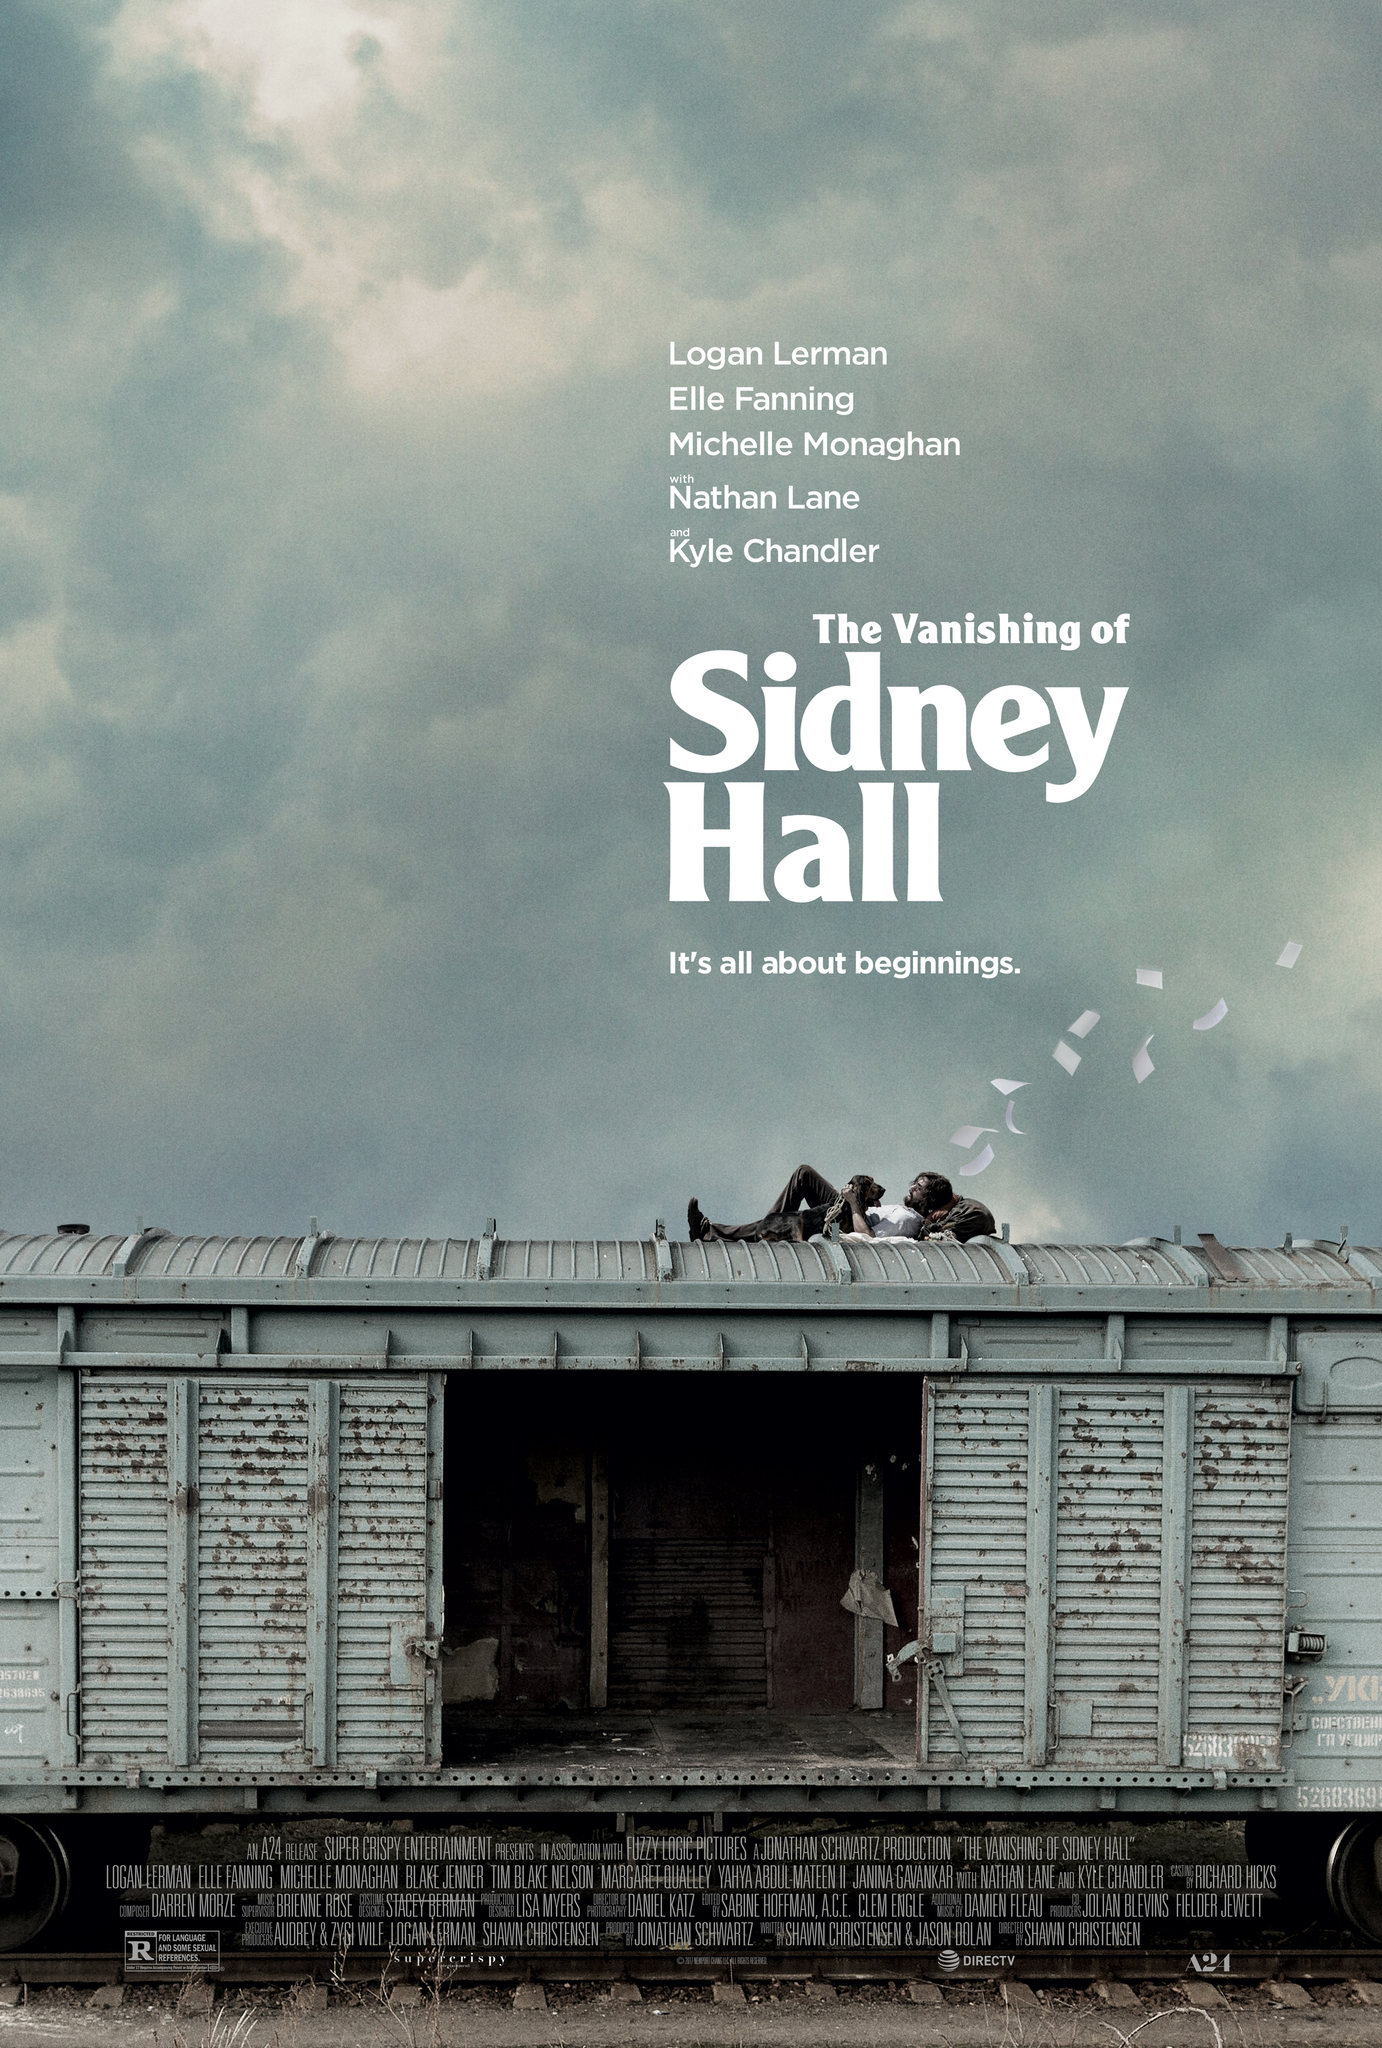 Nonton film The Vanishing of Sidney Hall layarkaca21 indoxx1 ganool online streaming terbaru